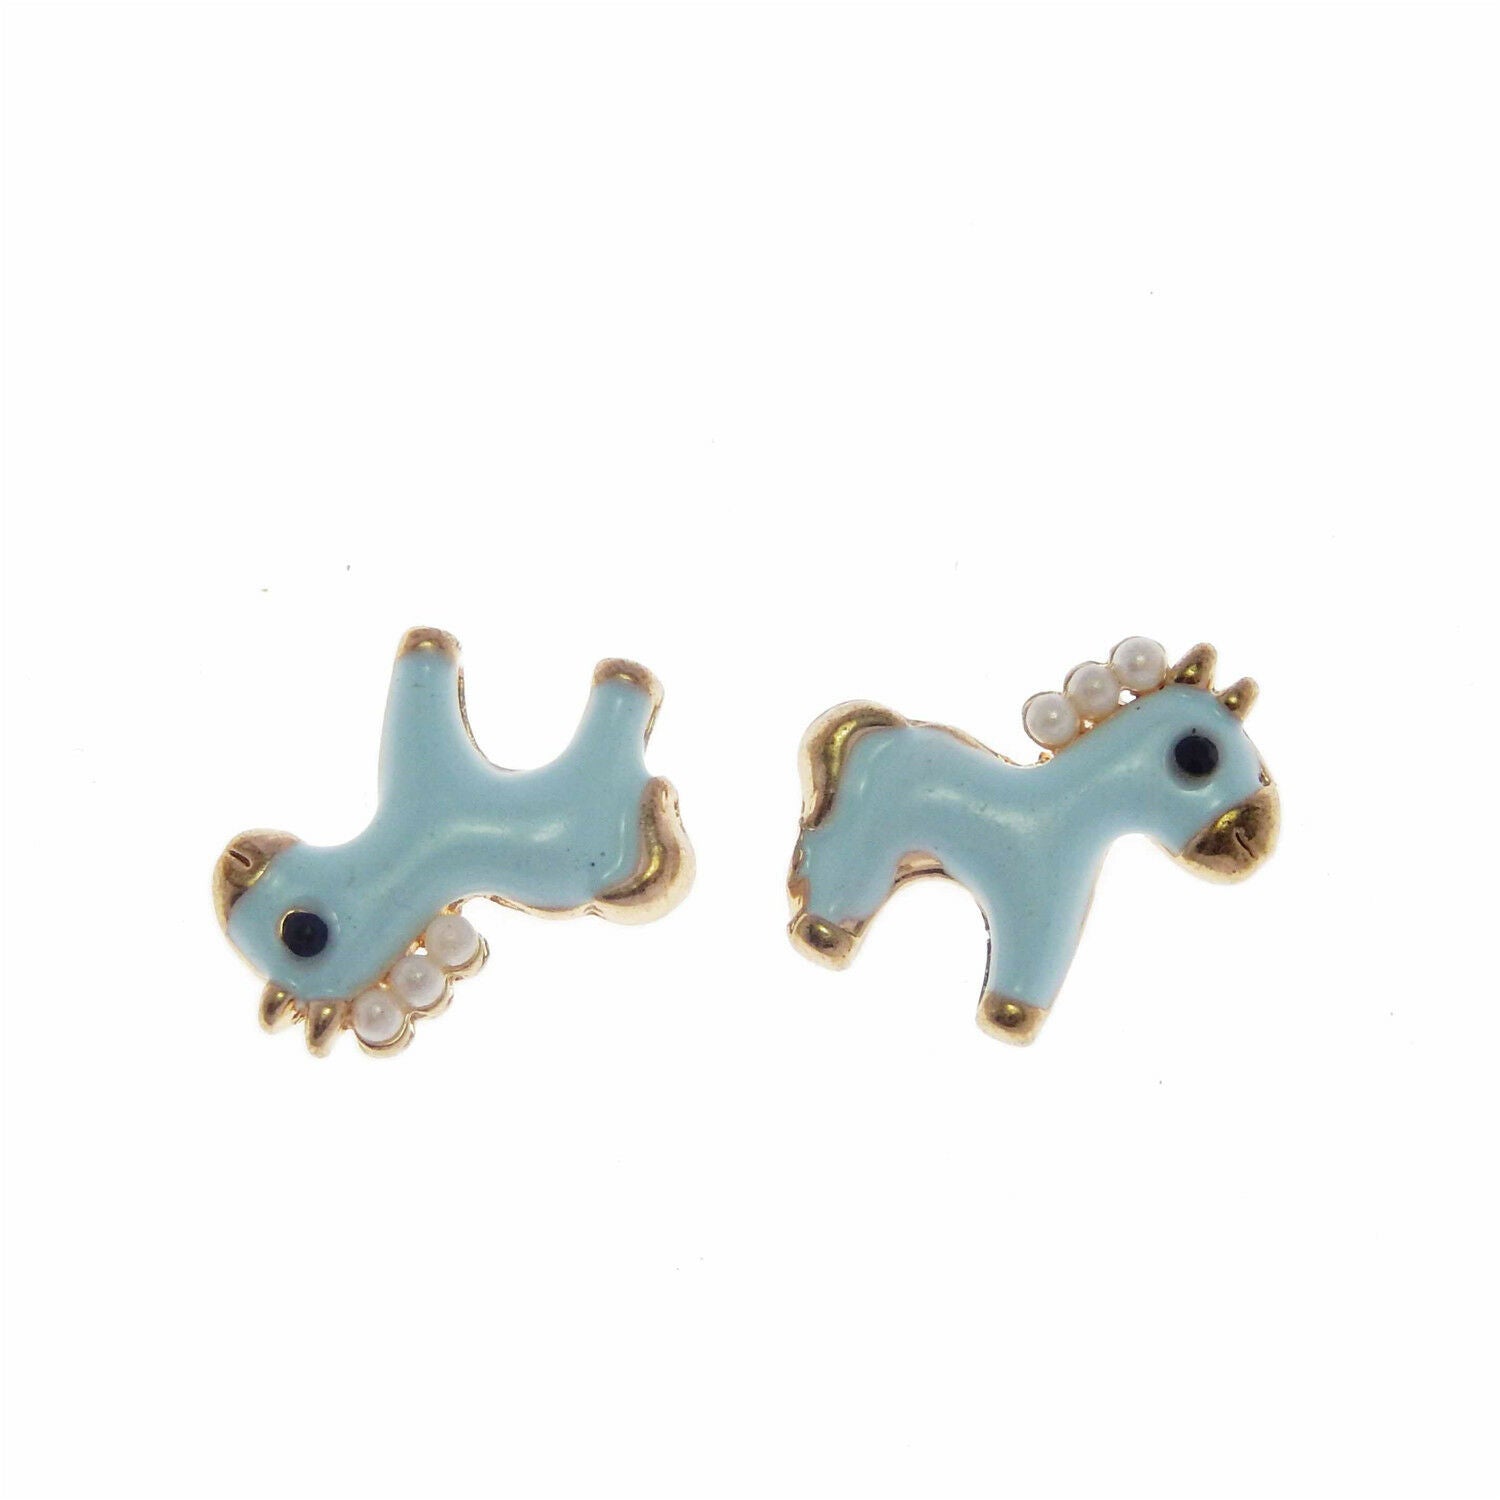 10 pcs Cute Horse Charm Enamel Blue with Imitation Pearls Pendant DIY 17*16mm